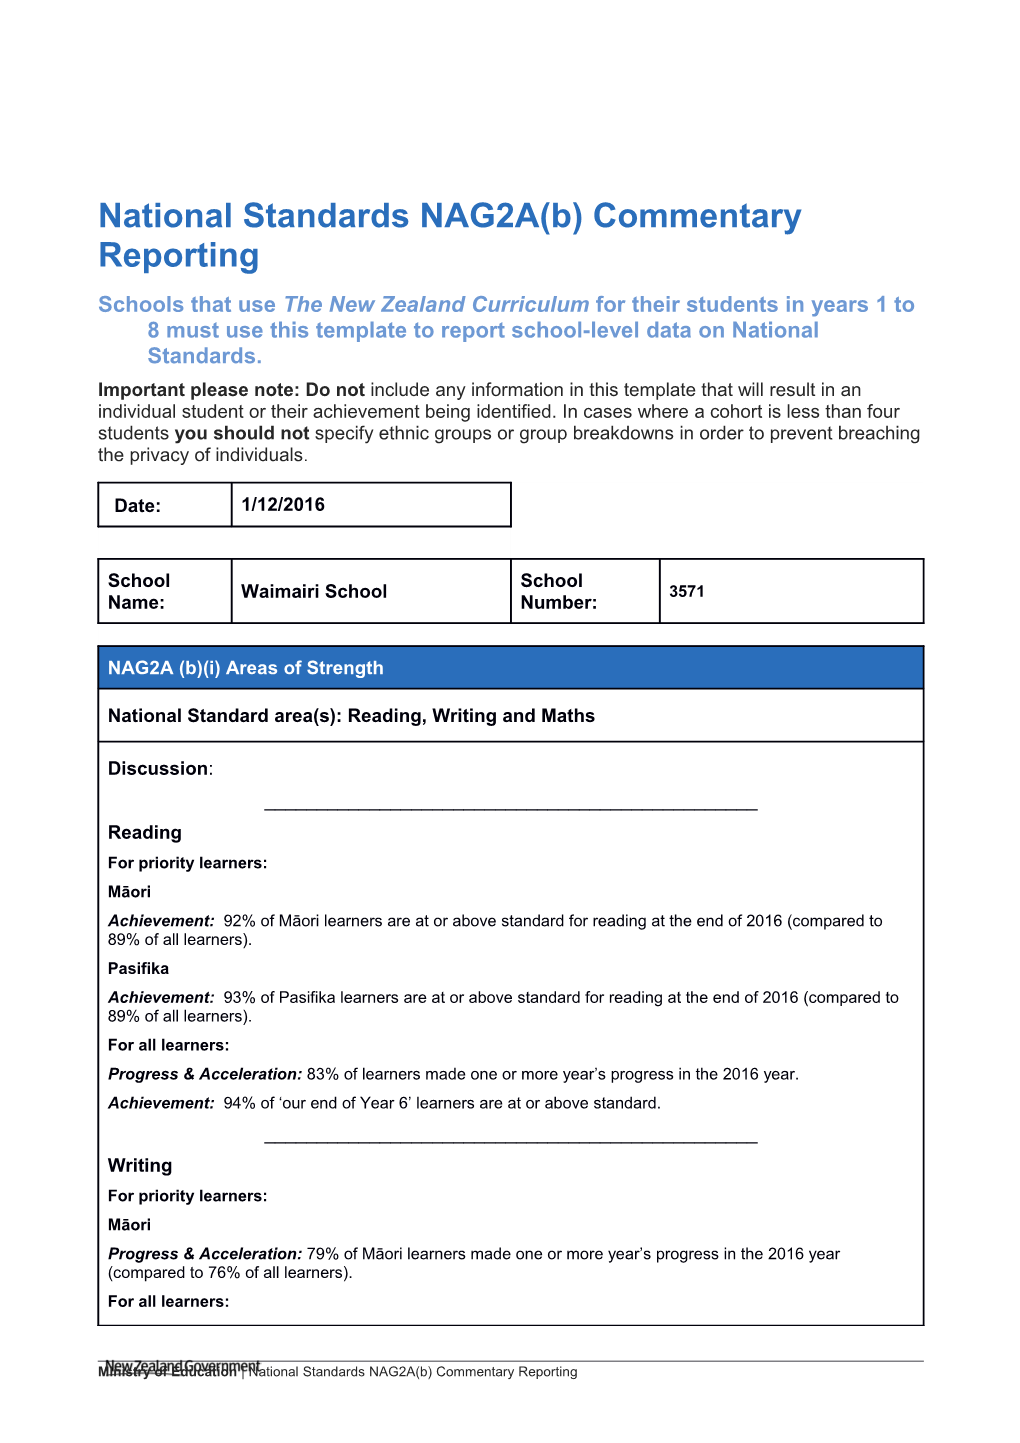 National Standards NAG2A(B) Reporting